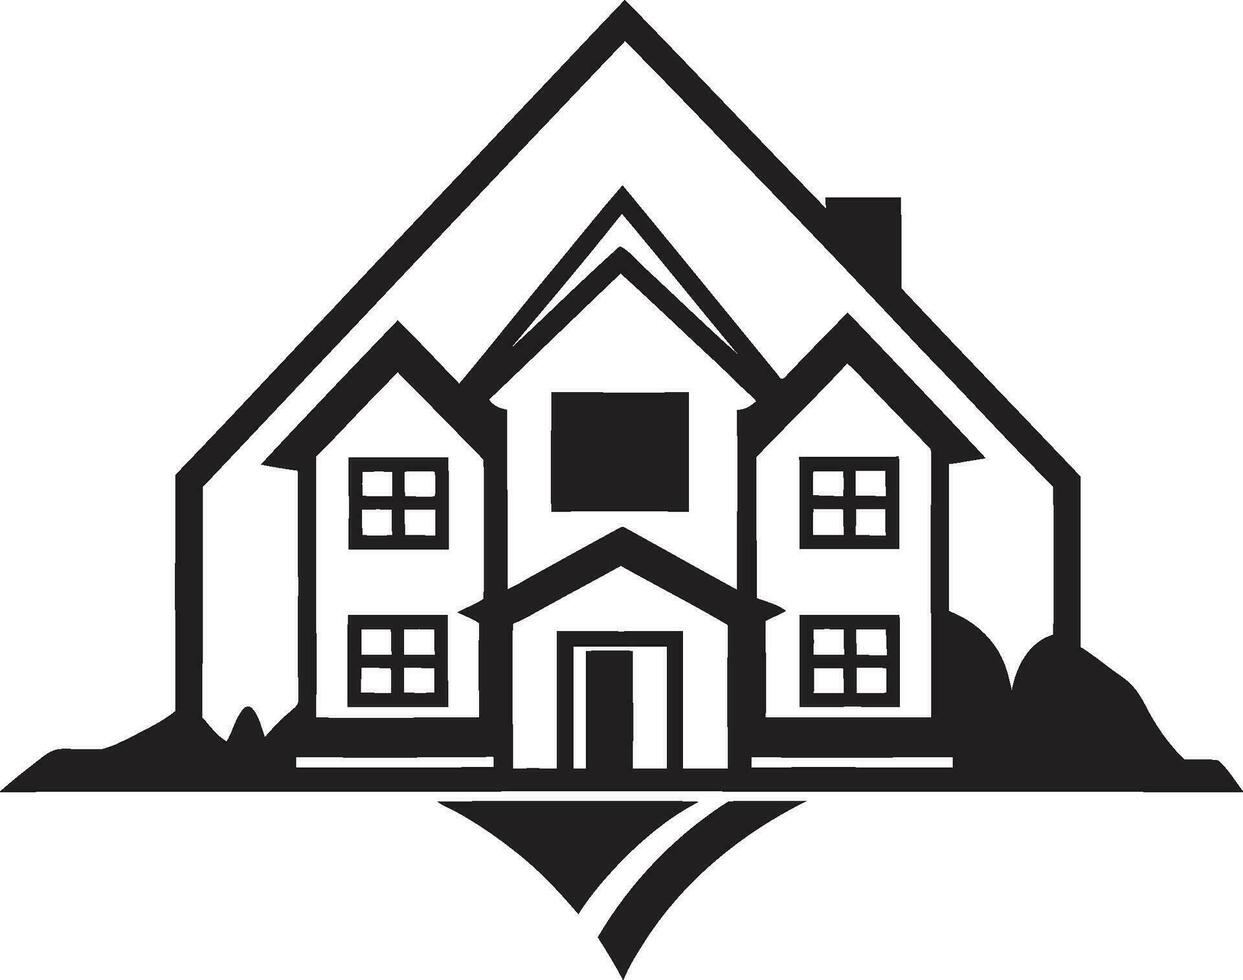 bostads- strålglans ikoniska fast egendom emblem arkitektonisk affinitet egendom logotyp design vektor